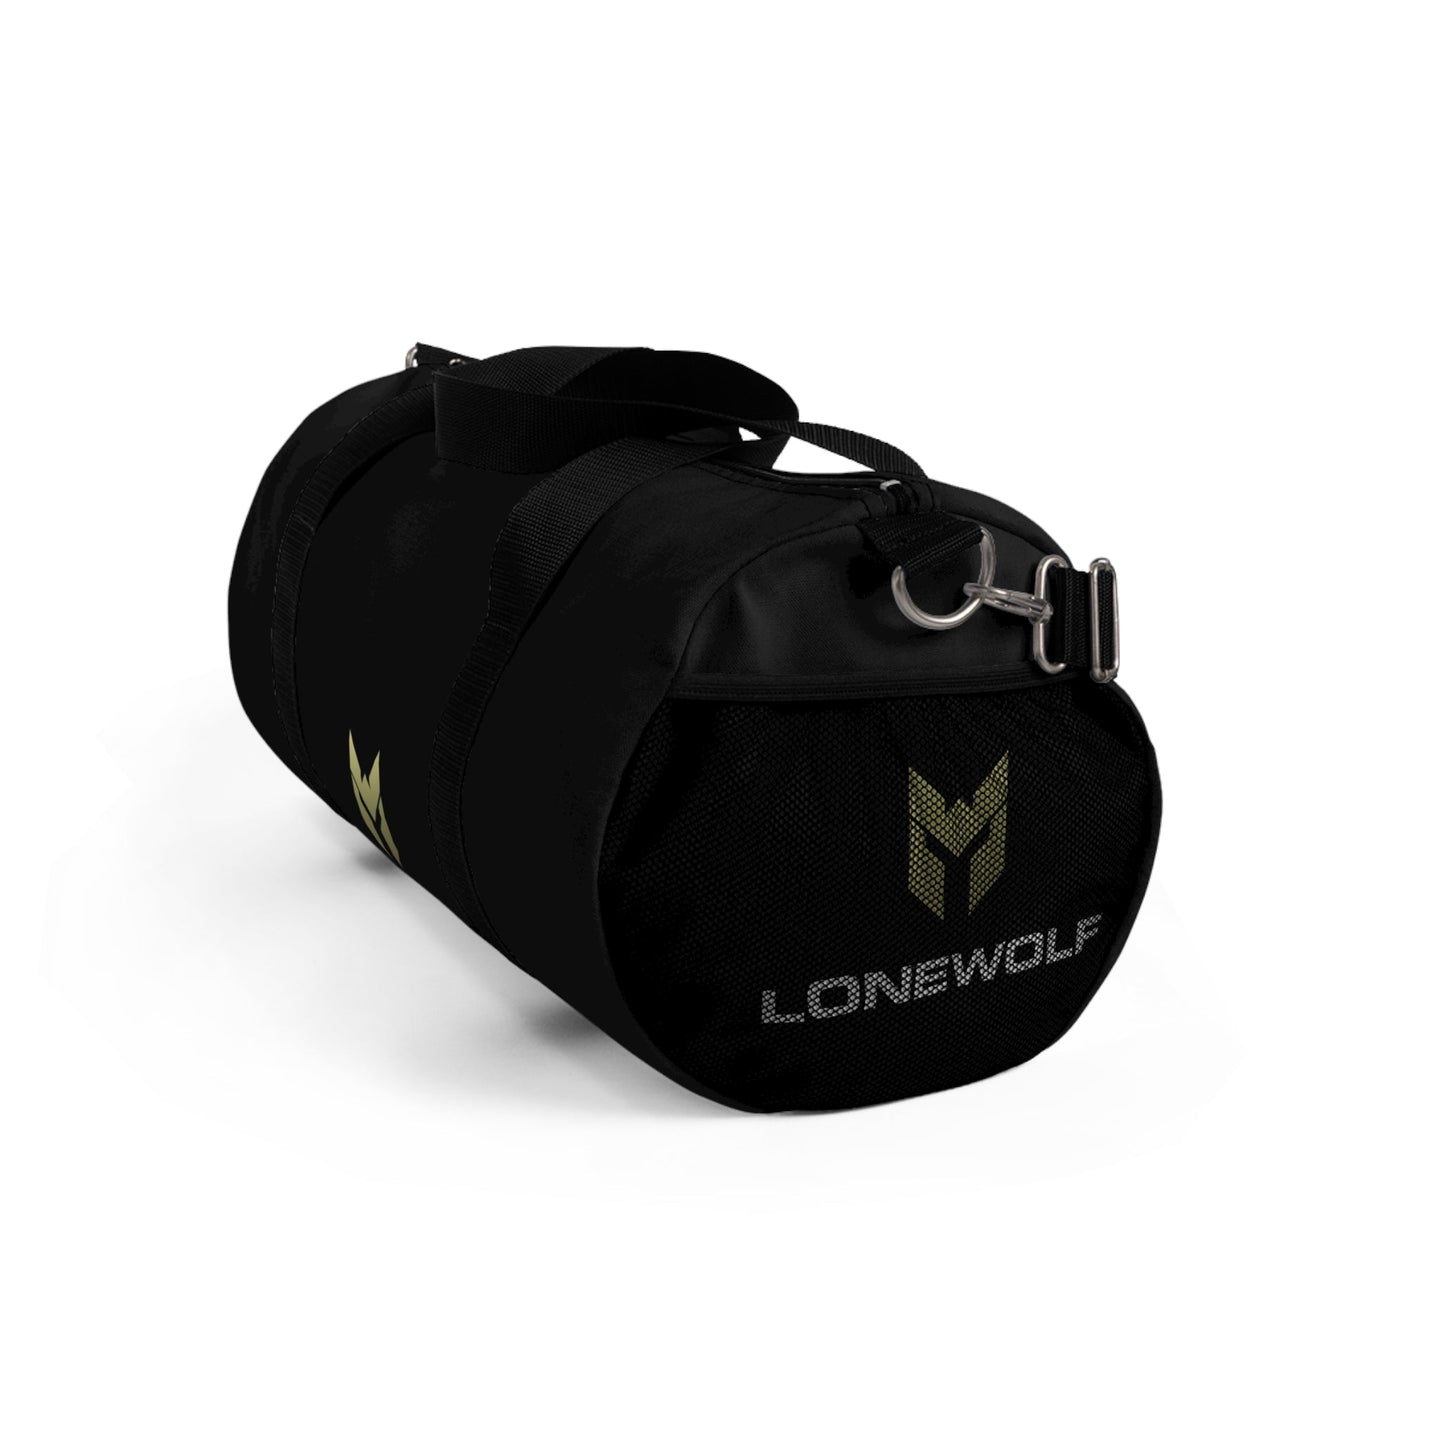 Lonewolf Duffel Bag - THE LONEWOLF BRAND PTY LTD